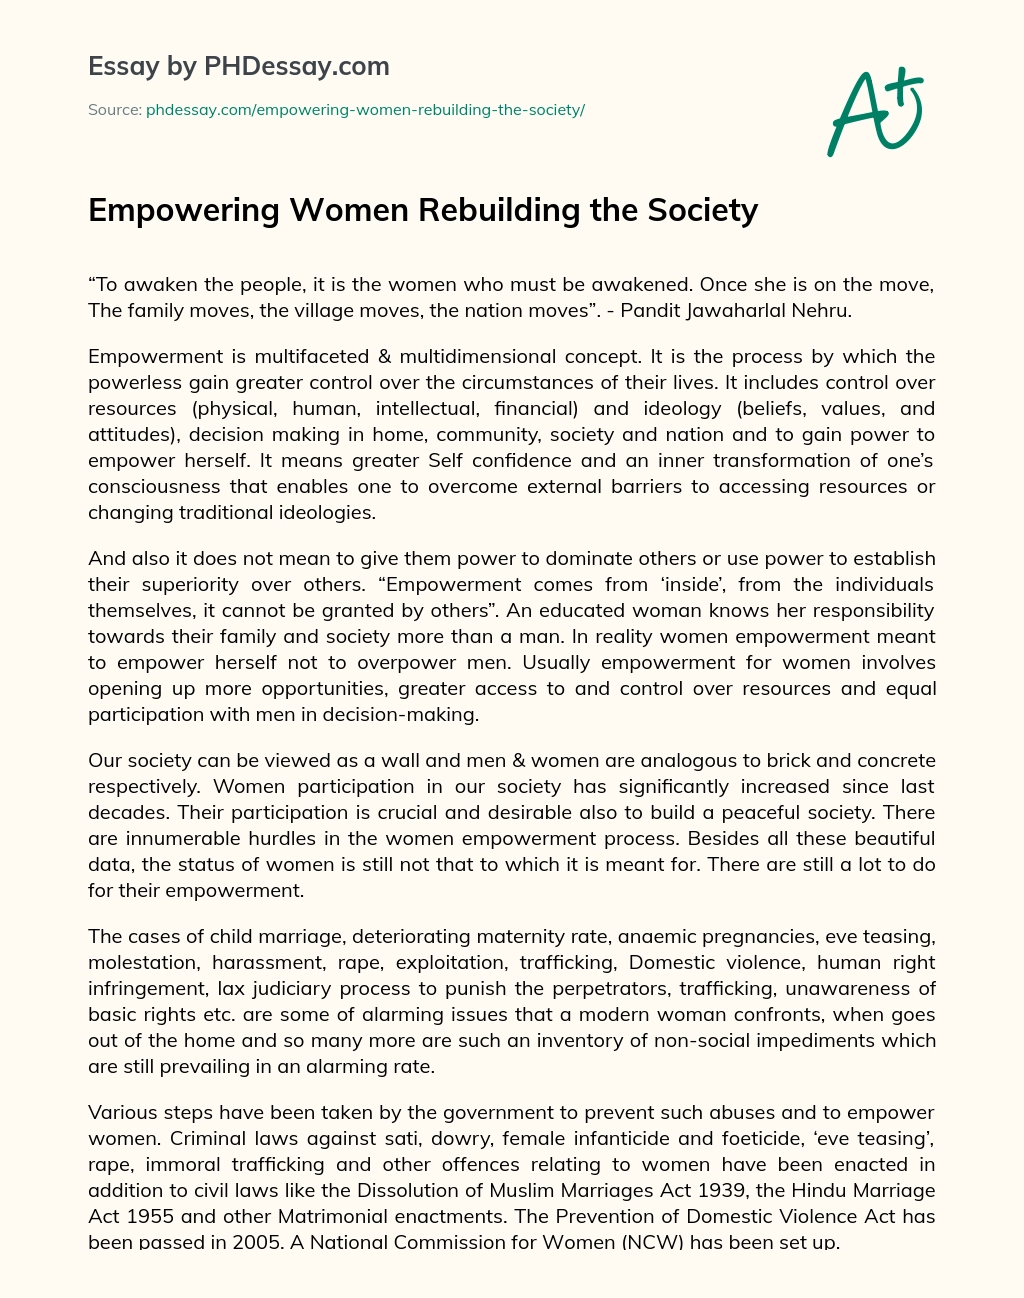 Empowering Women Rebuilding the Society essay